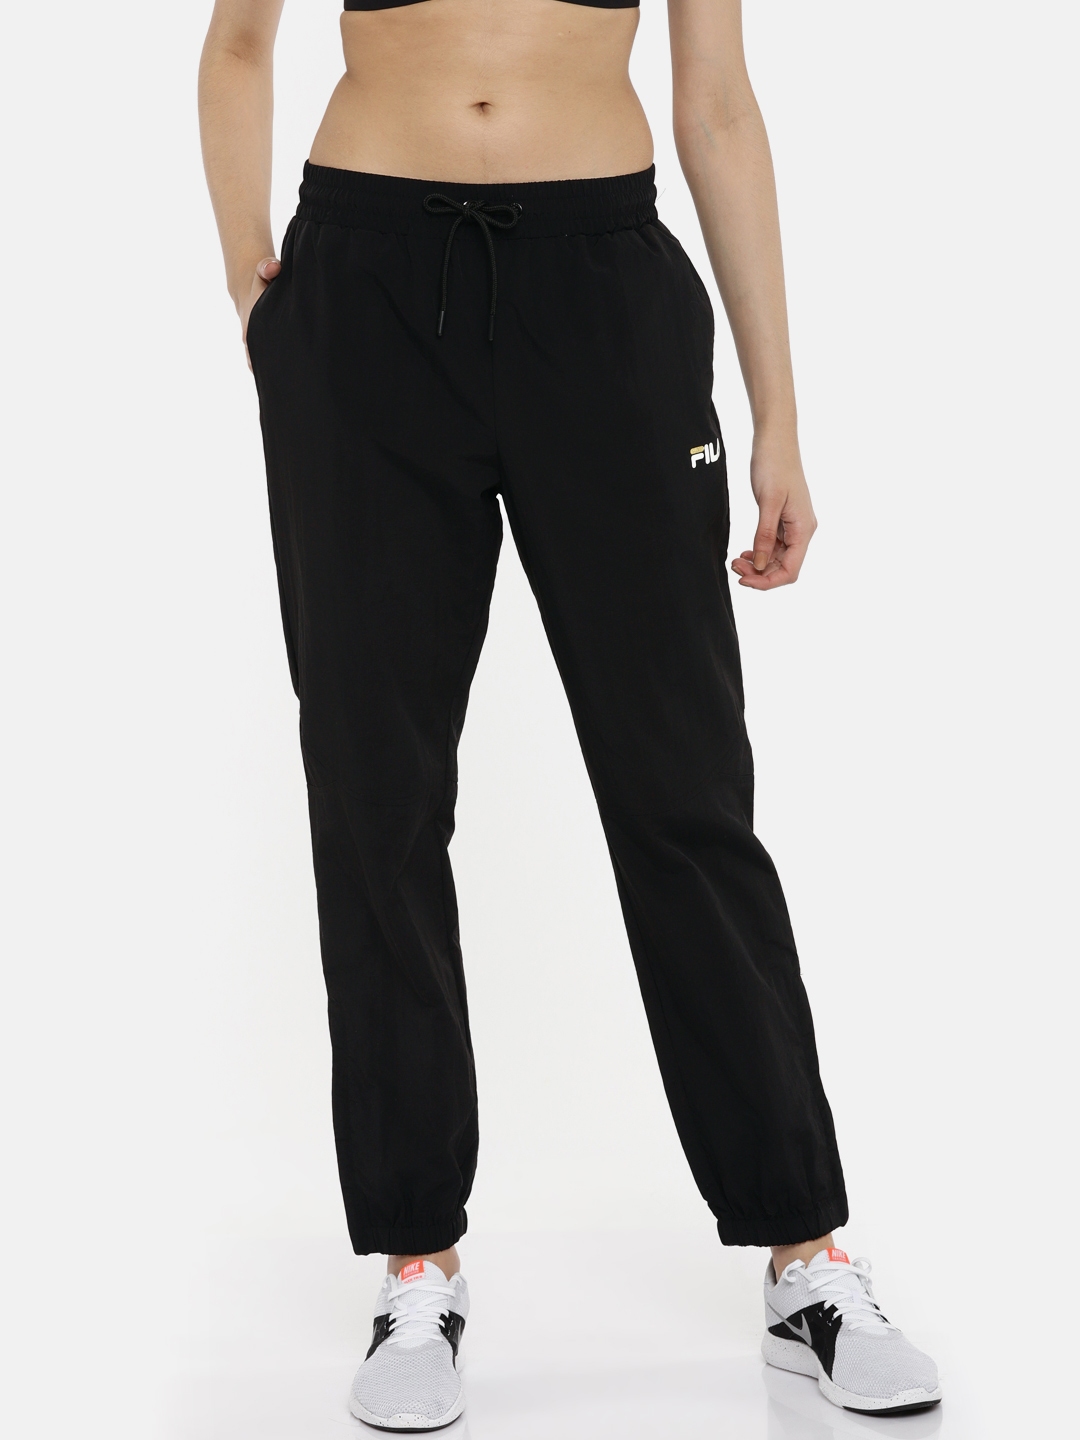 Fila Track pants and sweatpants for Women